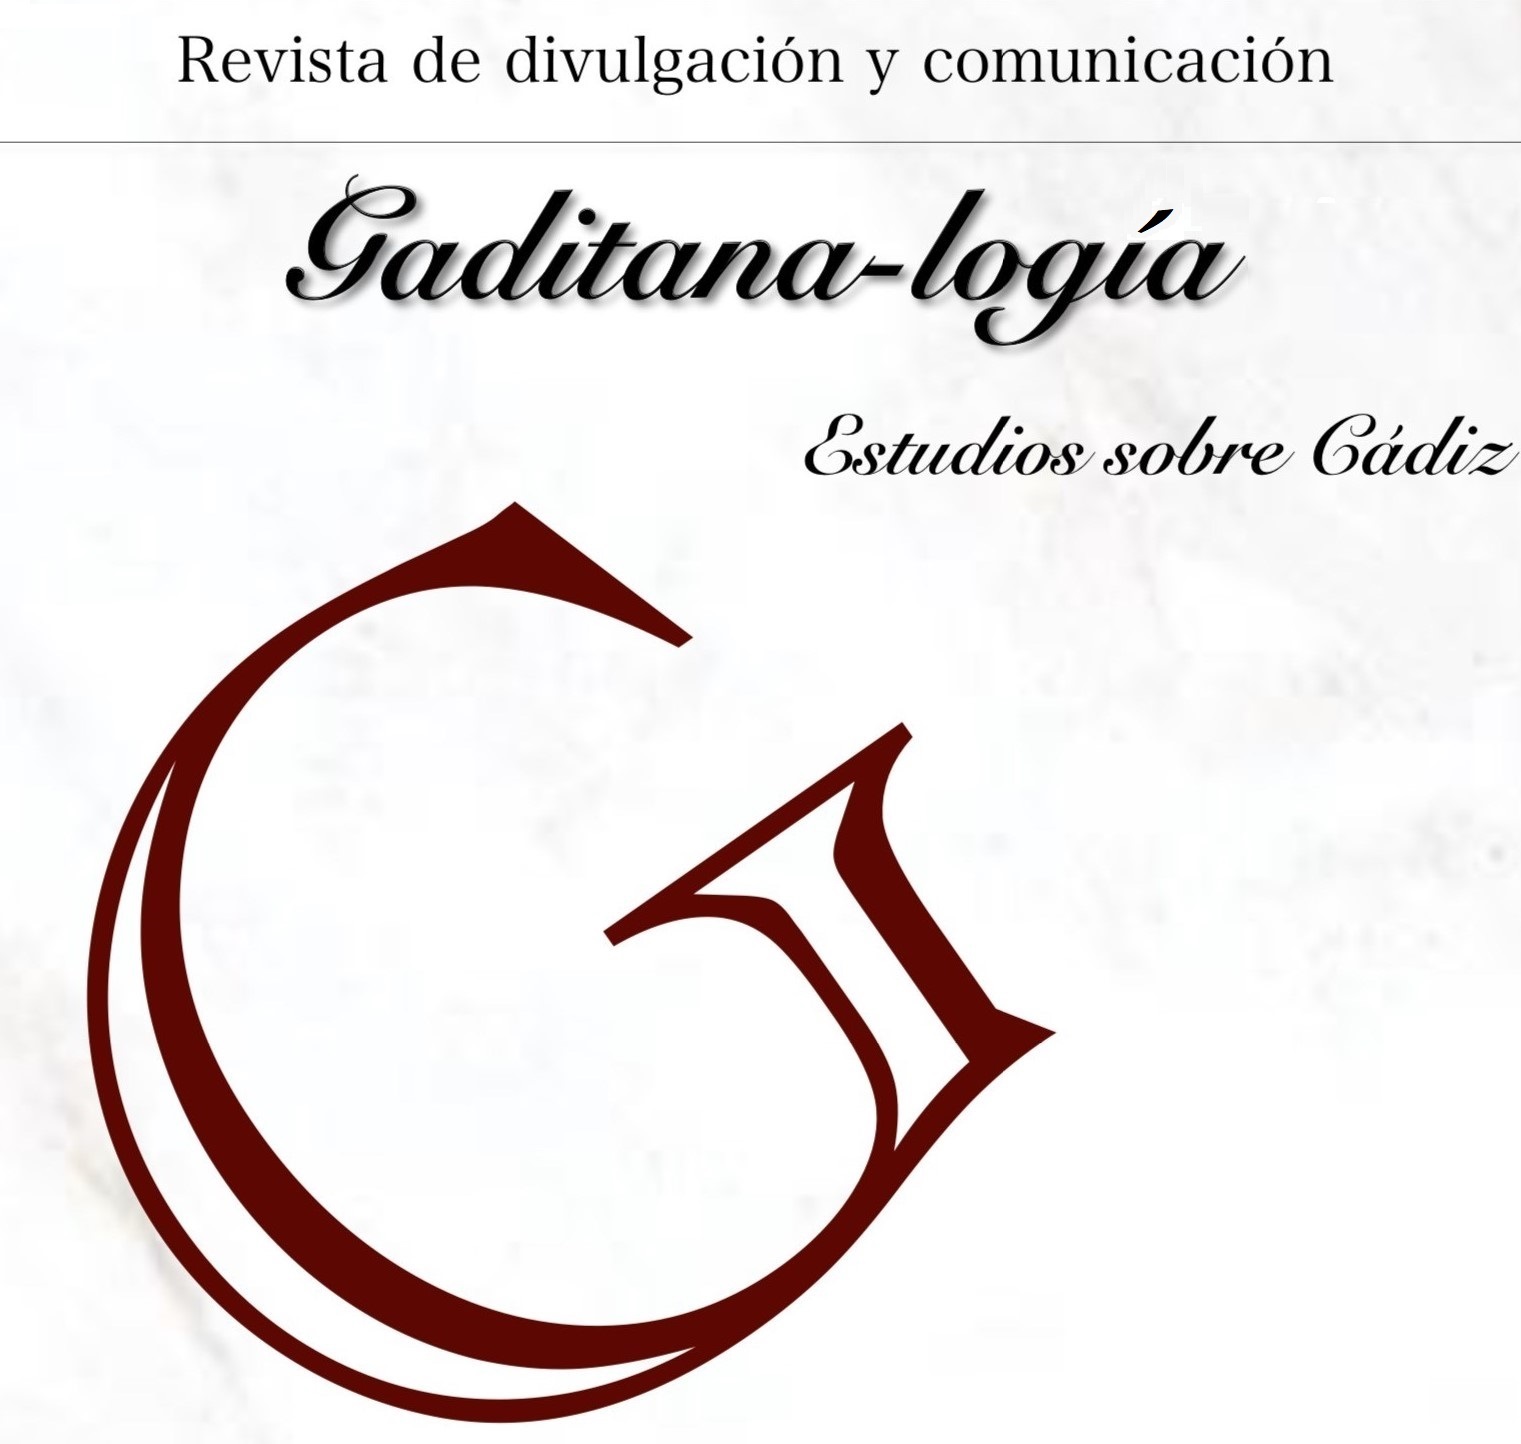 					Ver Vol. 1 Núm. 1 (2021): Gaditana-logía
				